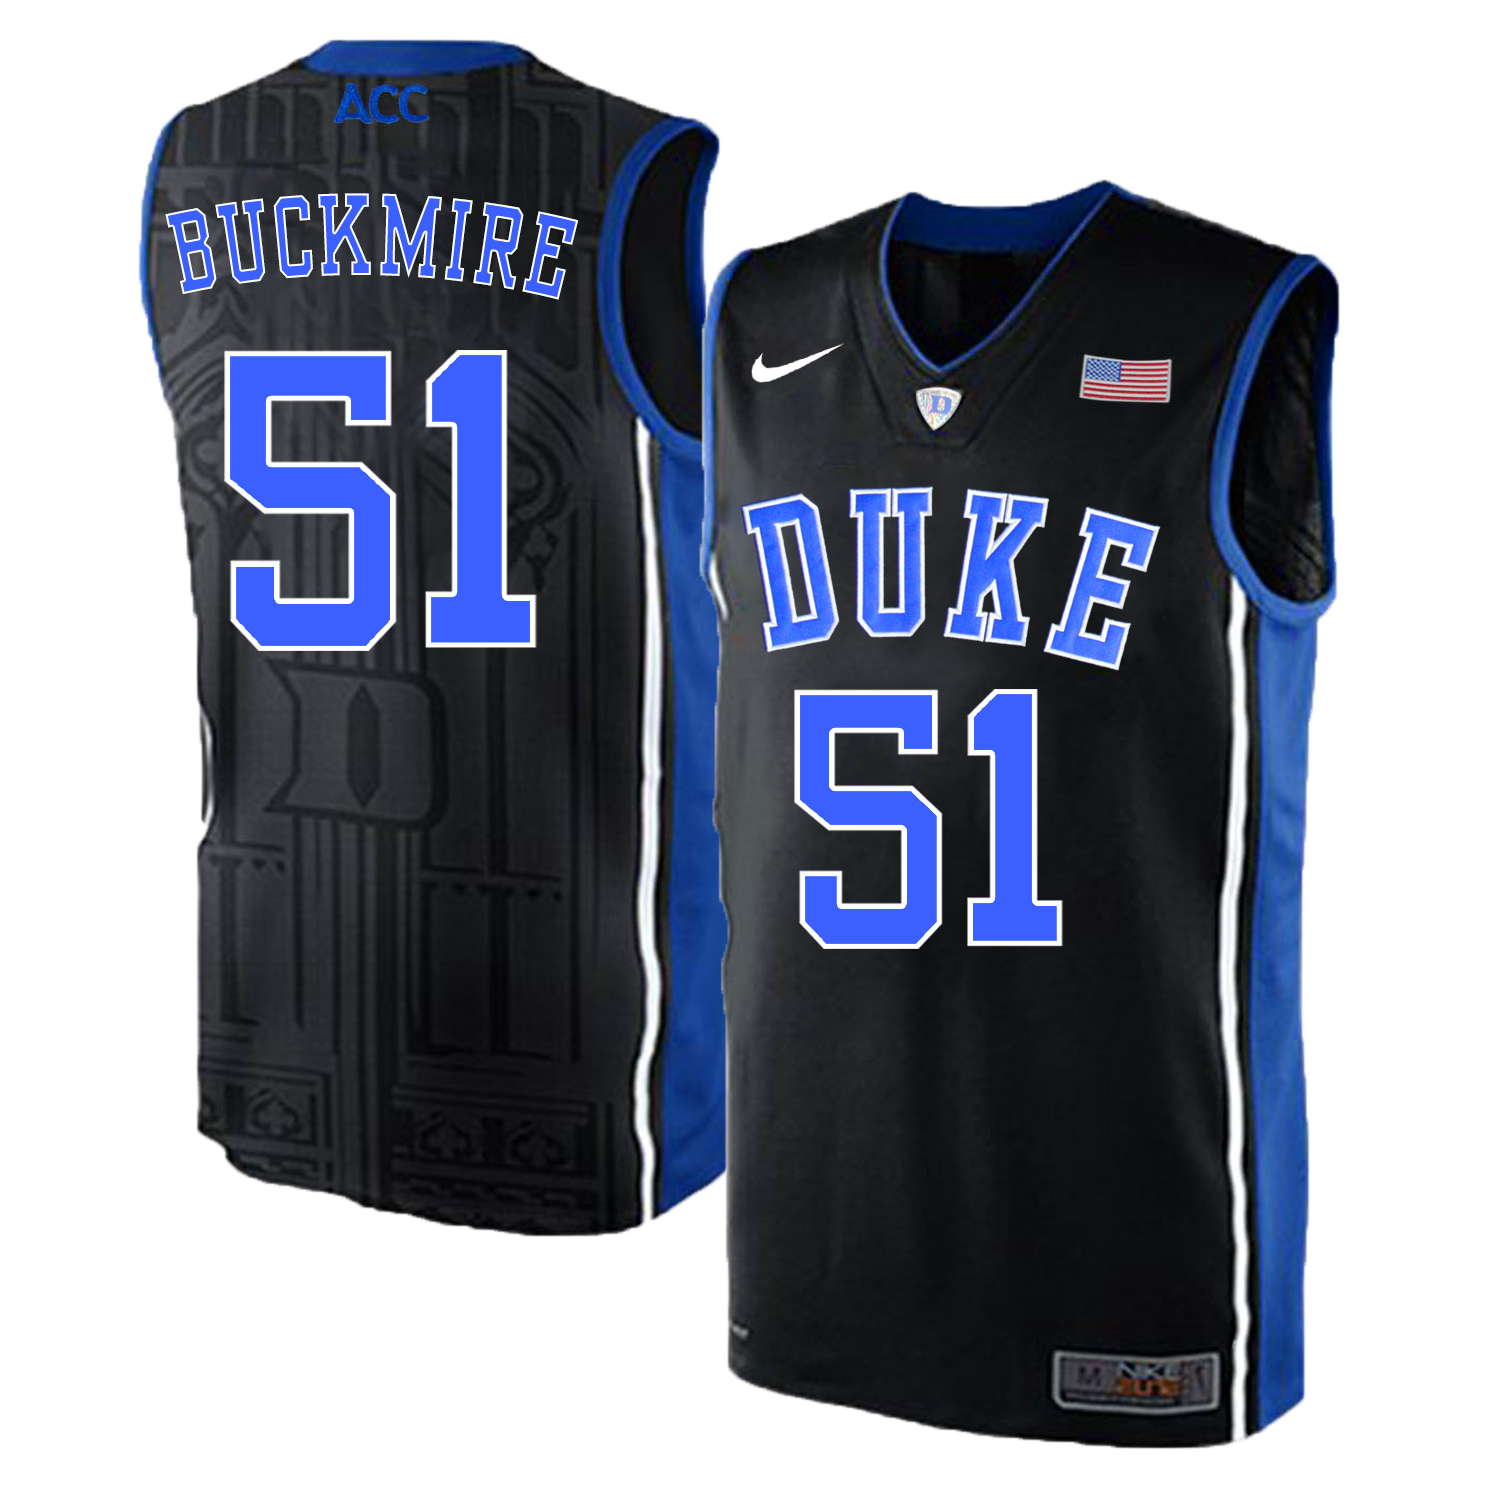 Duke Blue Devils 51 Mike Buckmire Black Elite Nike College Basketball Jersey